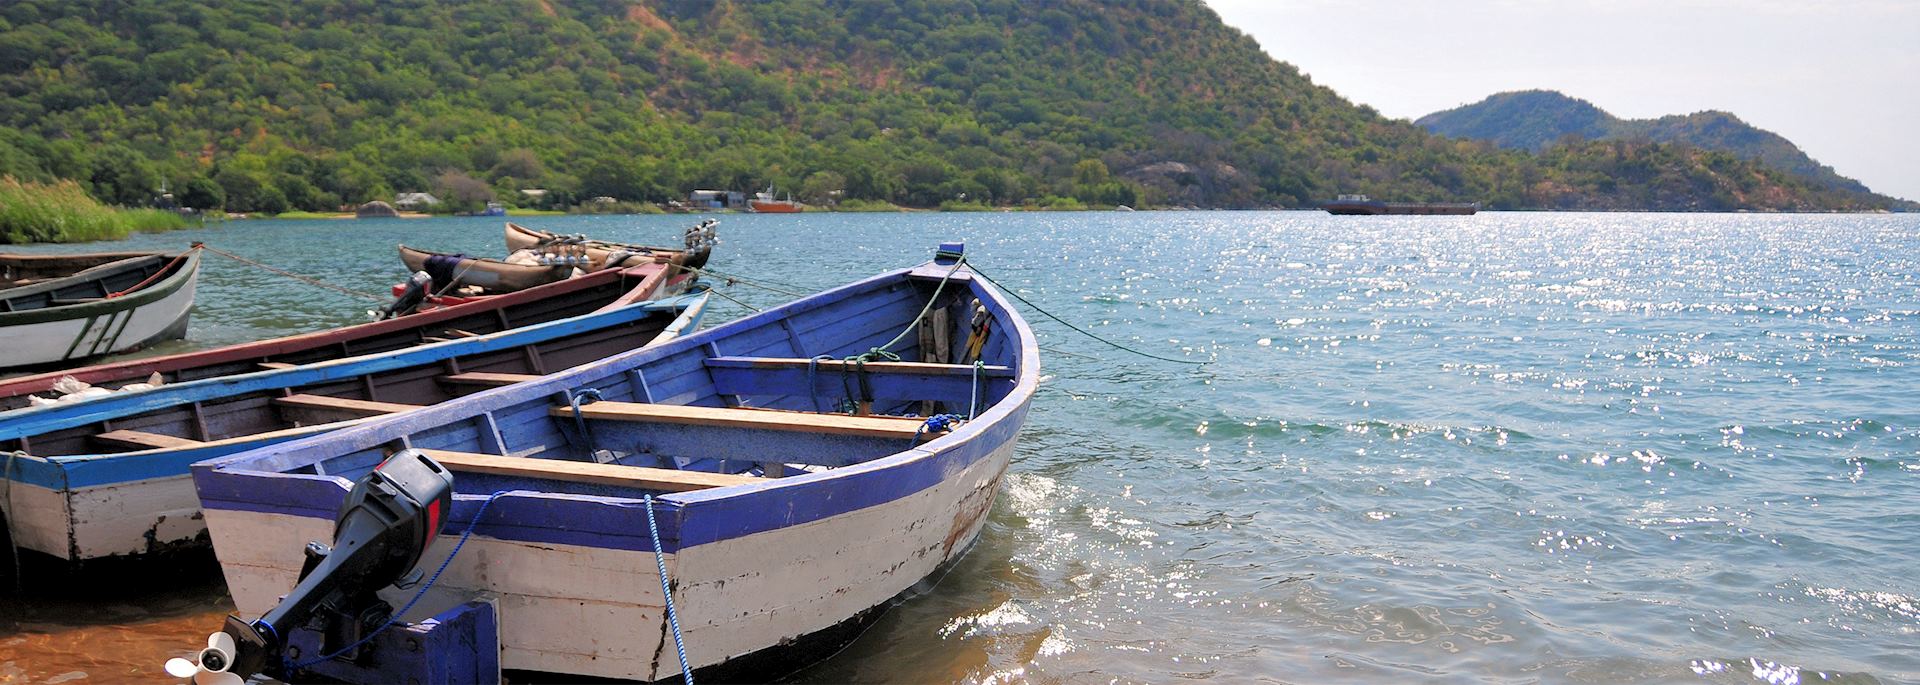 Boats on Lake Malawi